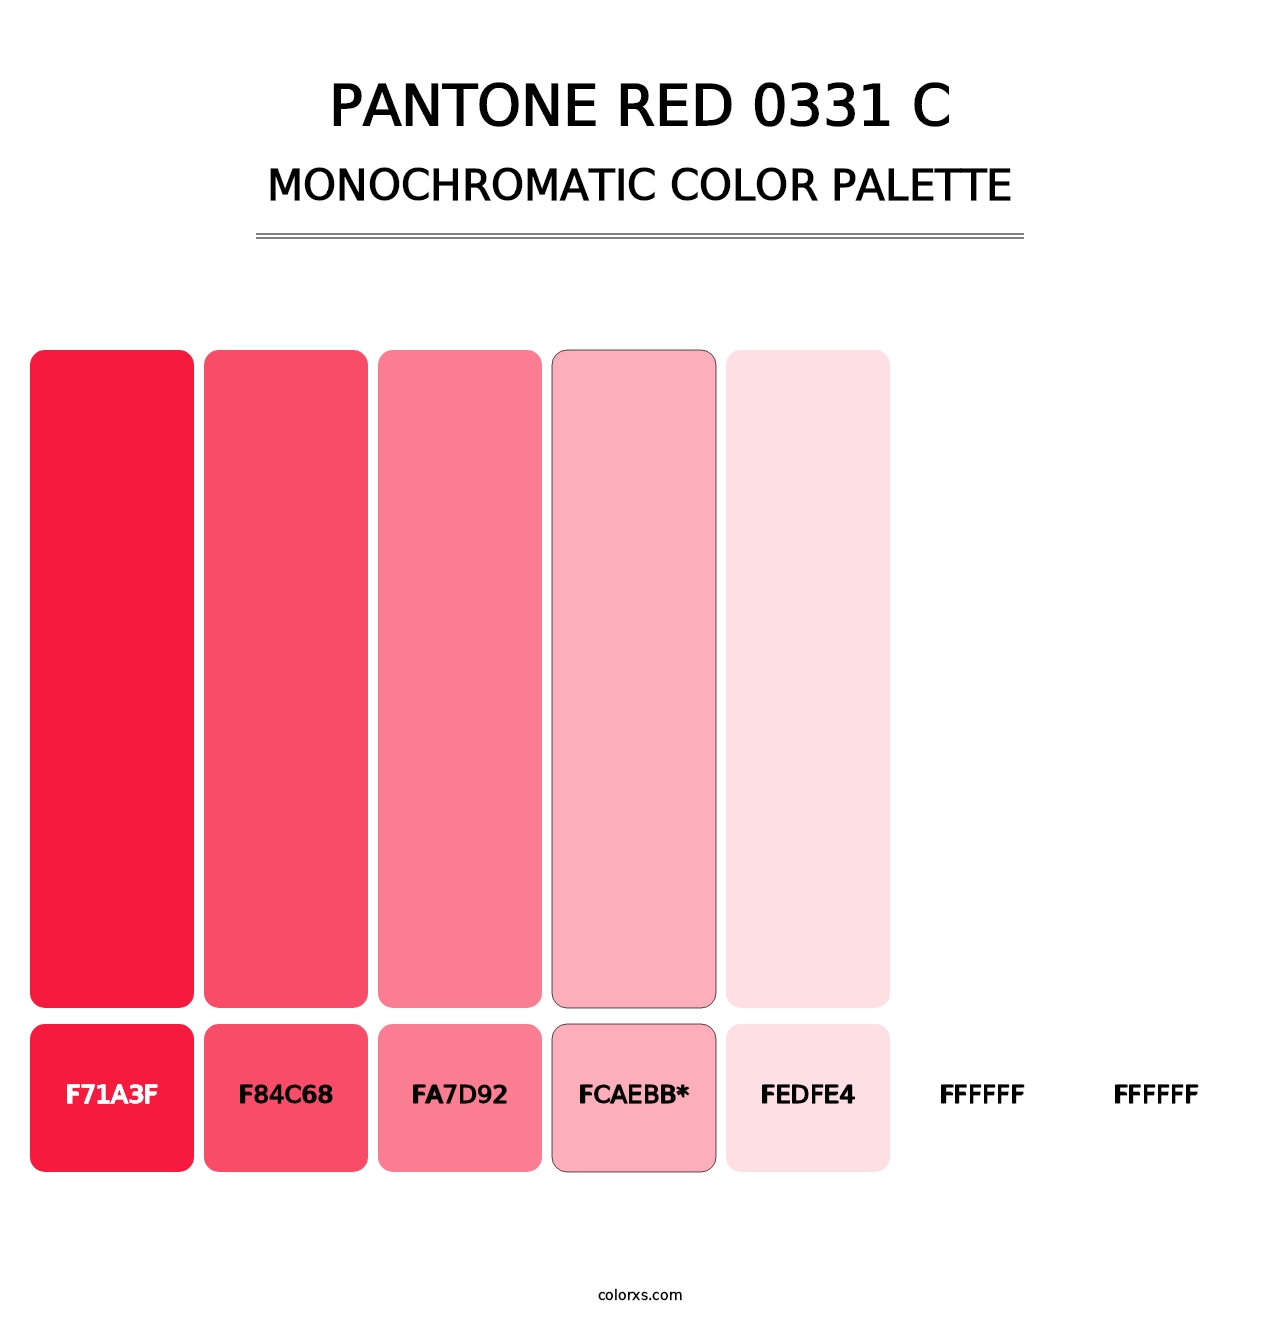 PANTONE Red 0331 C - Monochromatic Color Palette